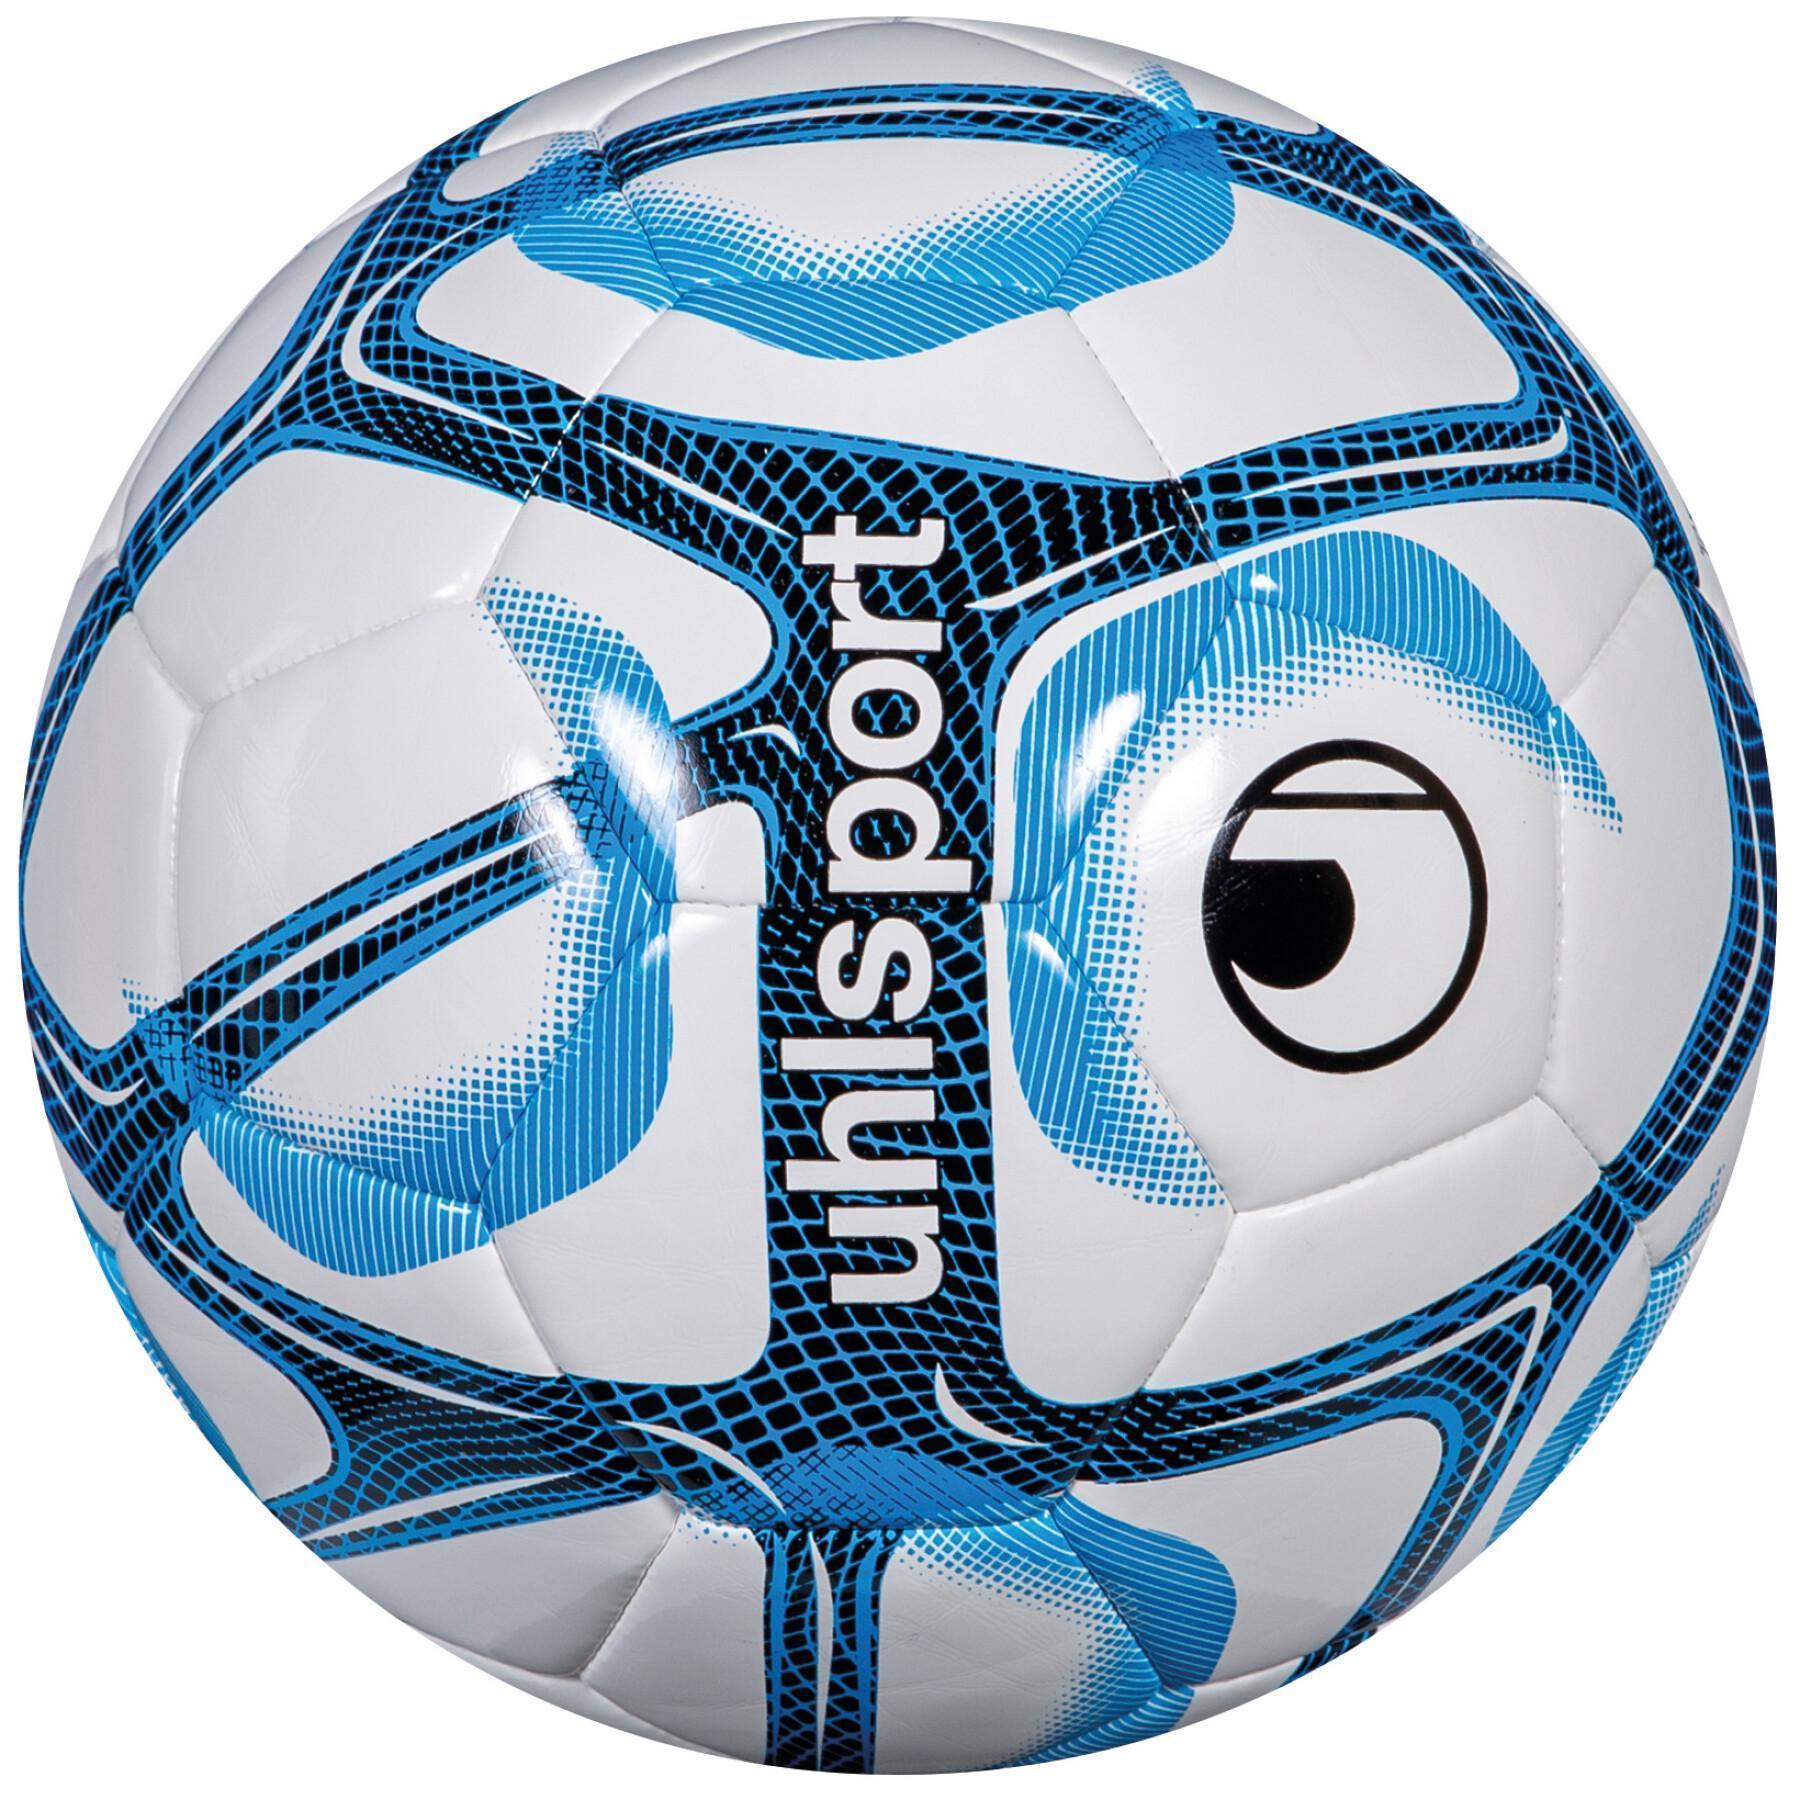 Triumph-Ballon Uhlsport Training Top